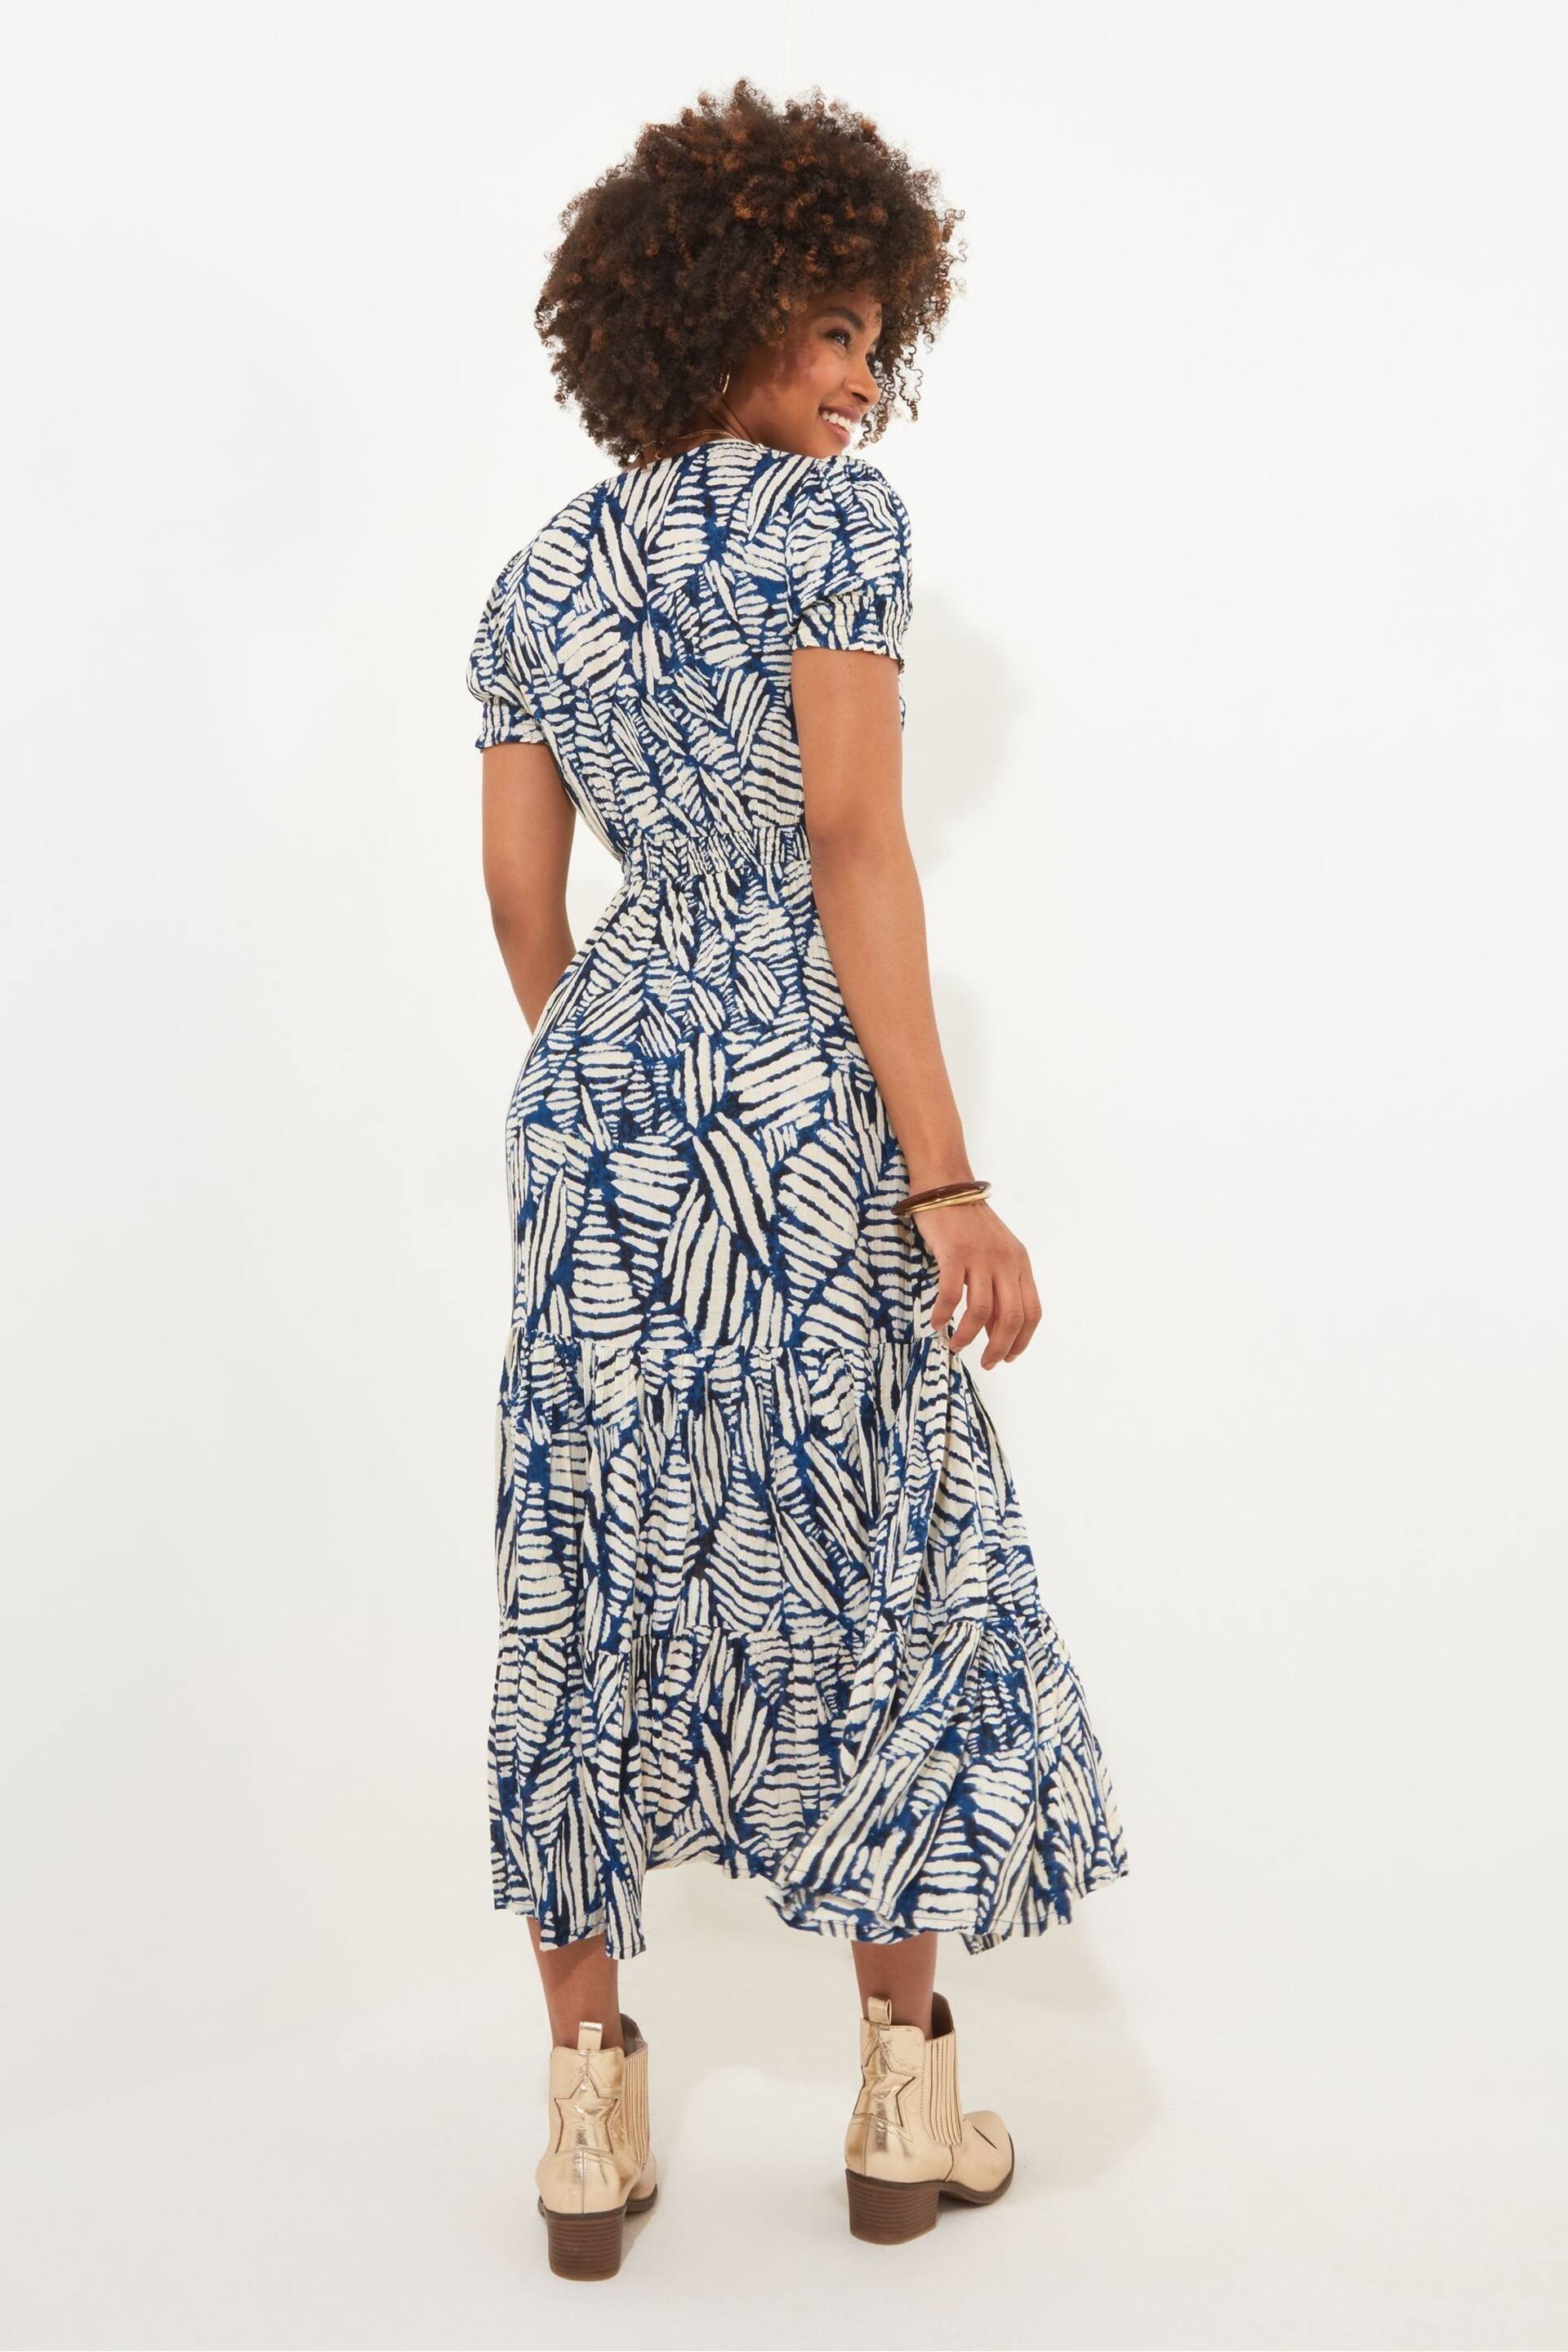 Joe Browns Blue Fern Print Crinkle Midi Dress - Image 2 of 5